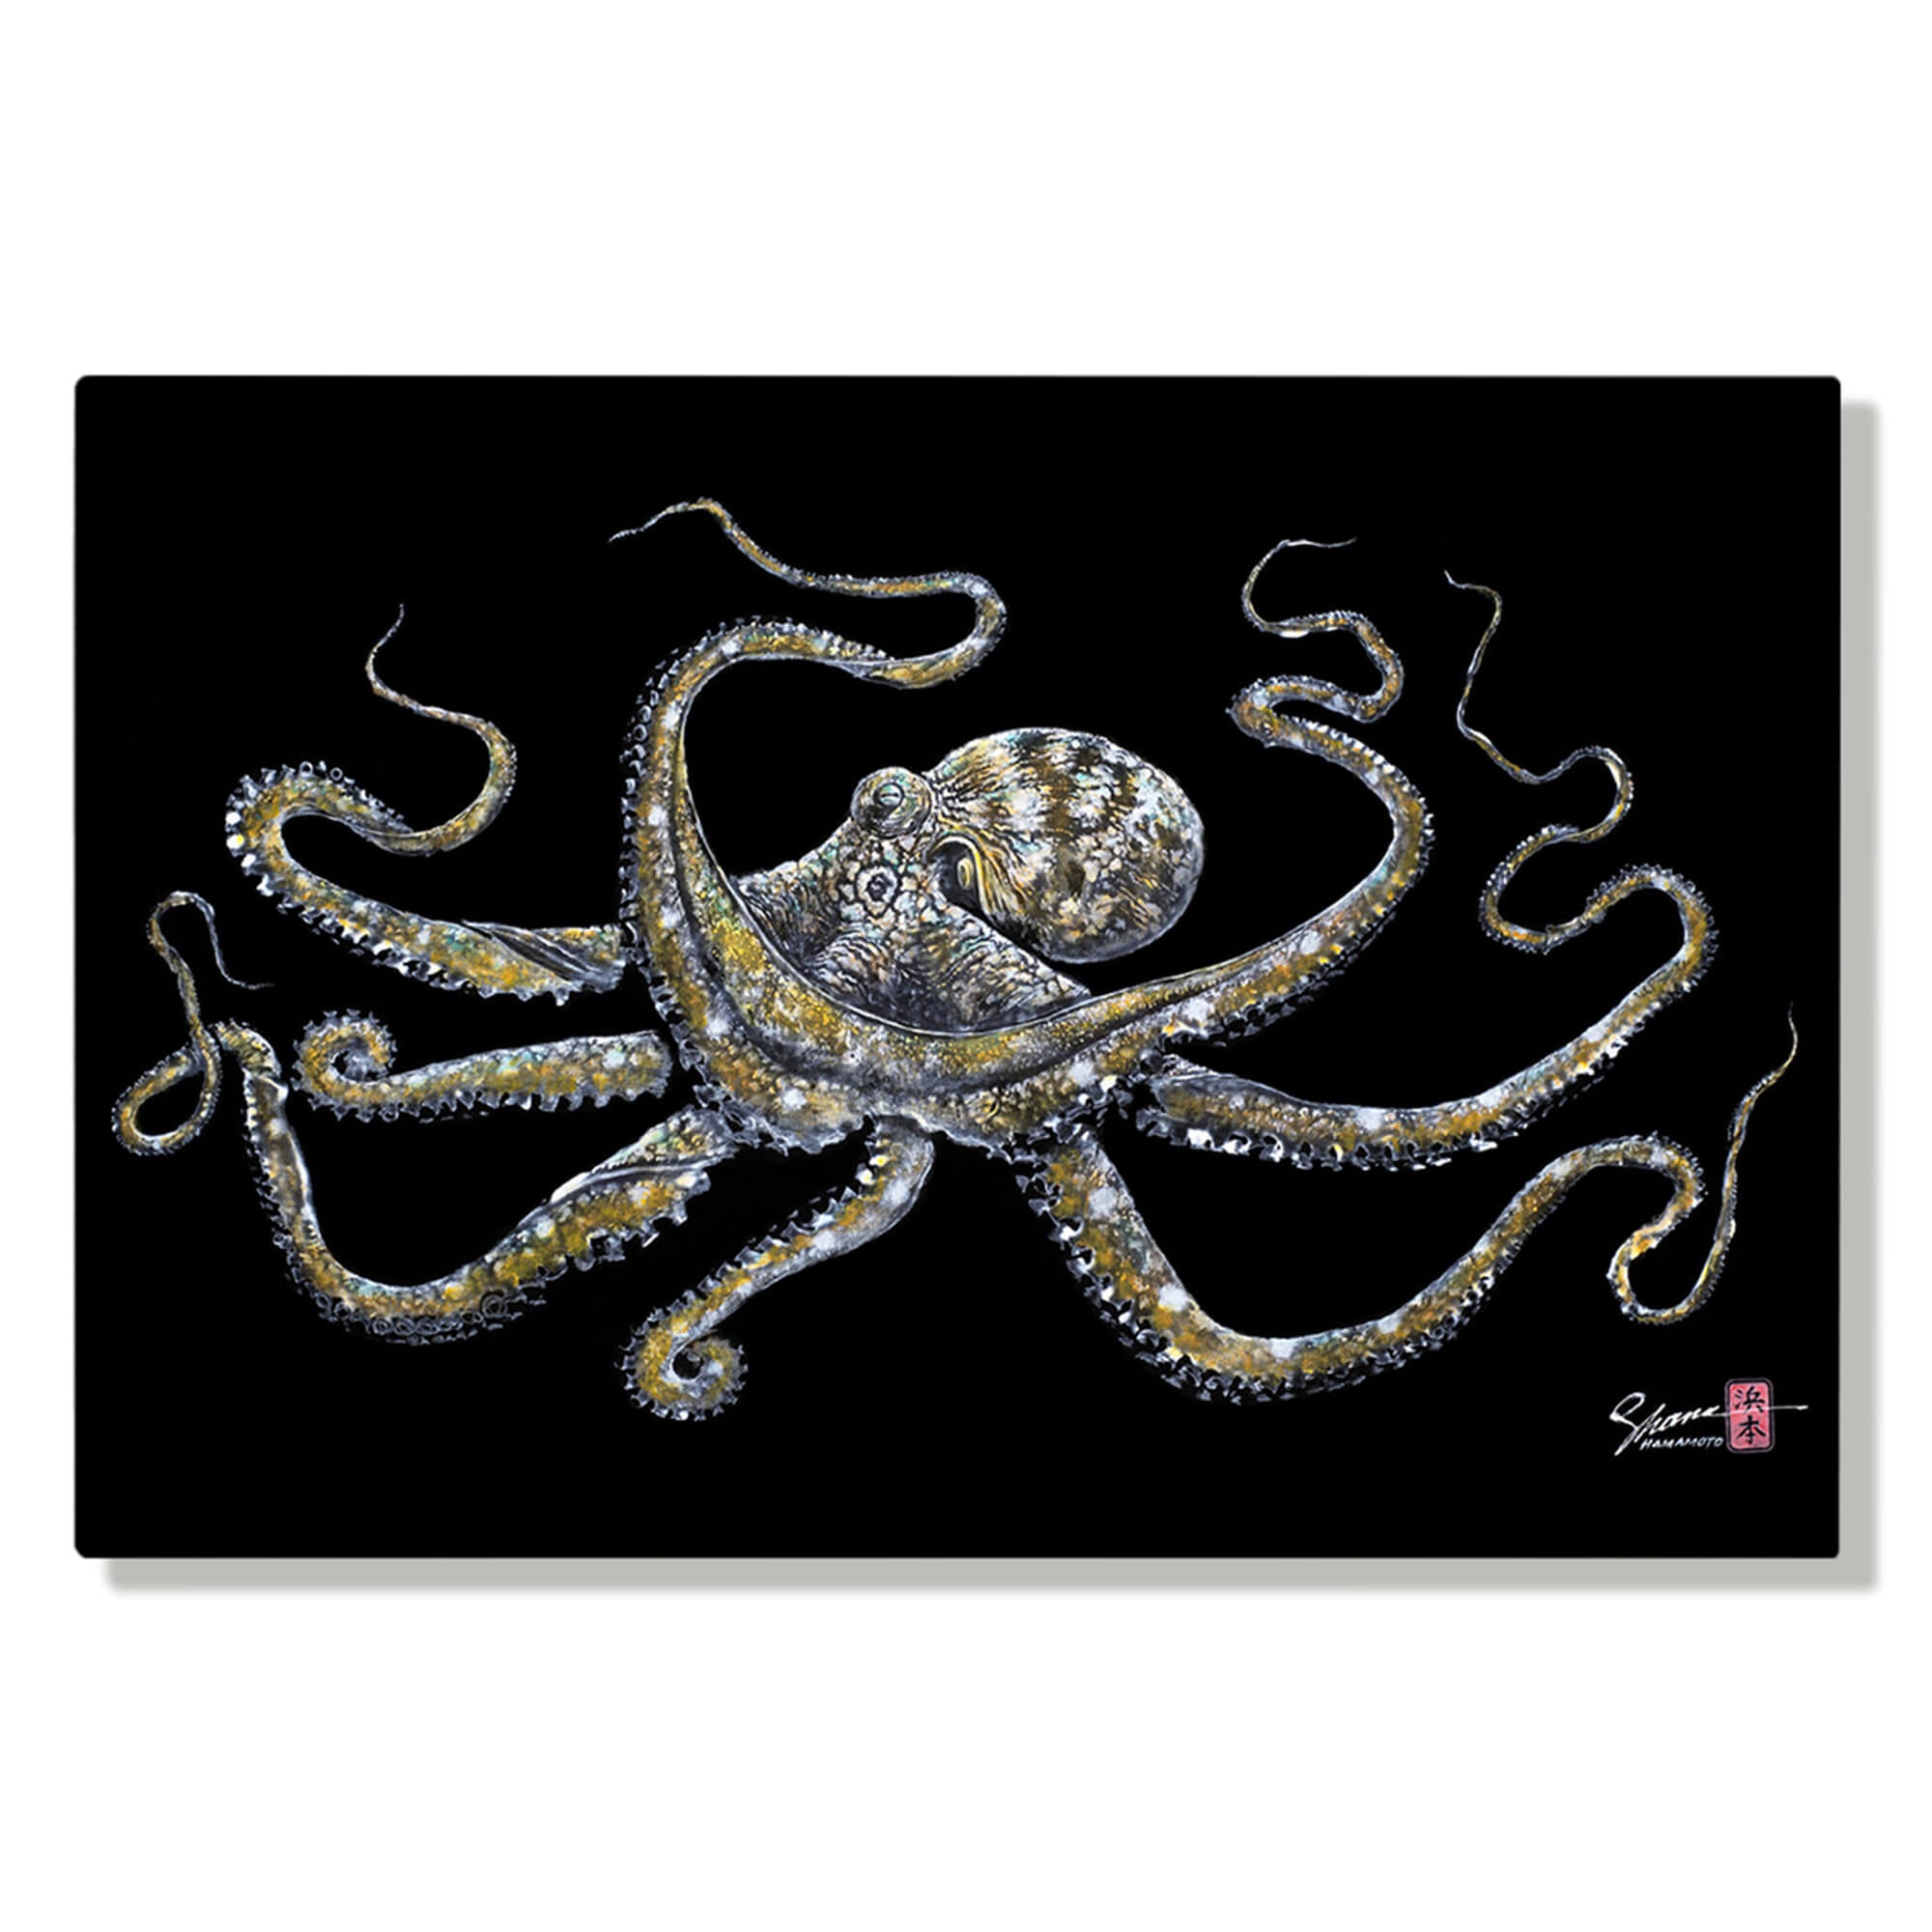 Metal print of Tako (Octopus) by Hawaii gyotaku artist Shane Hamamoto